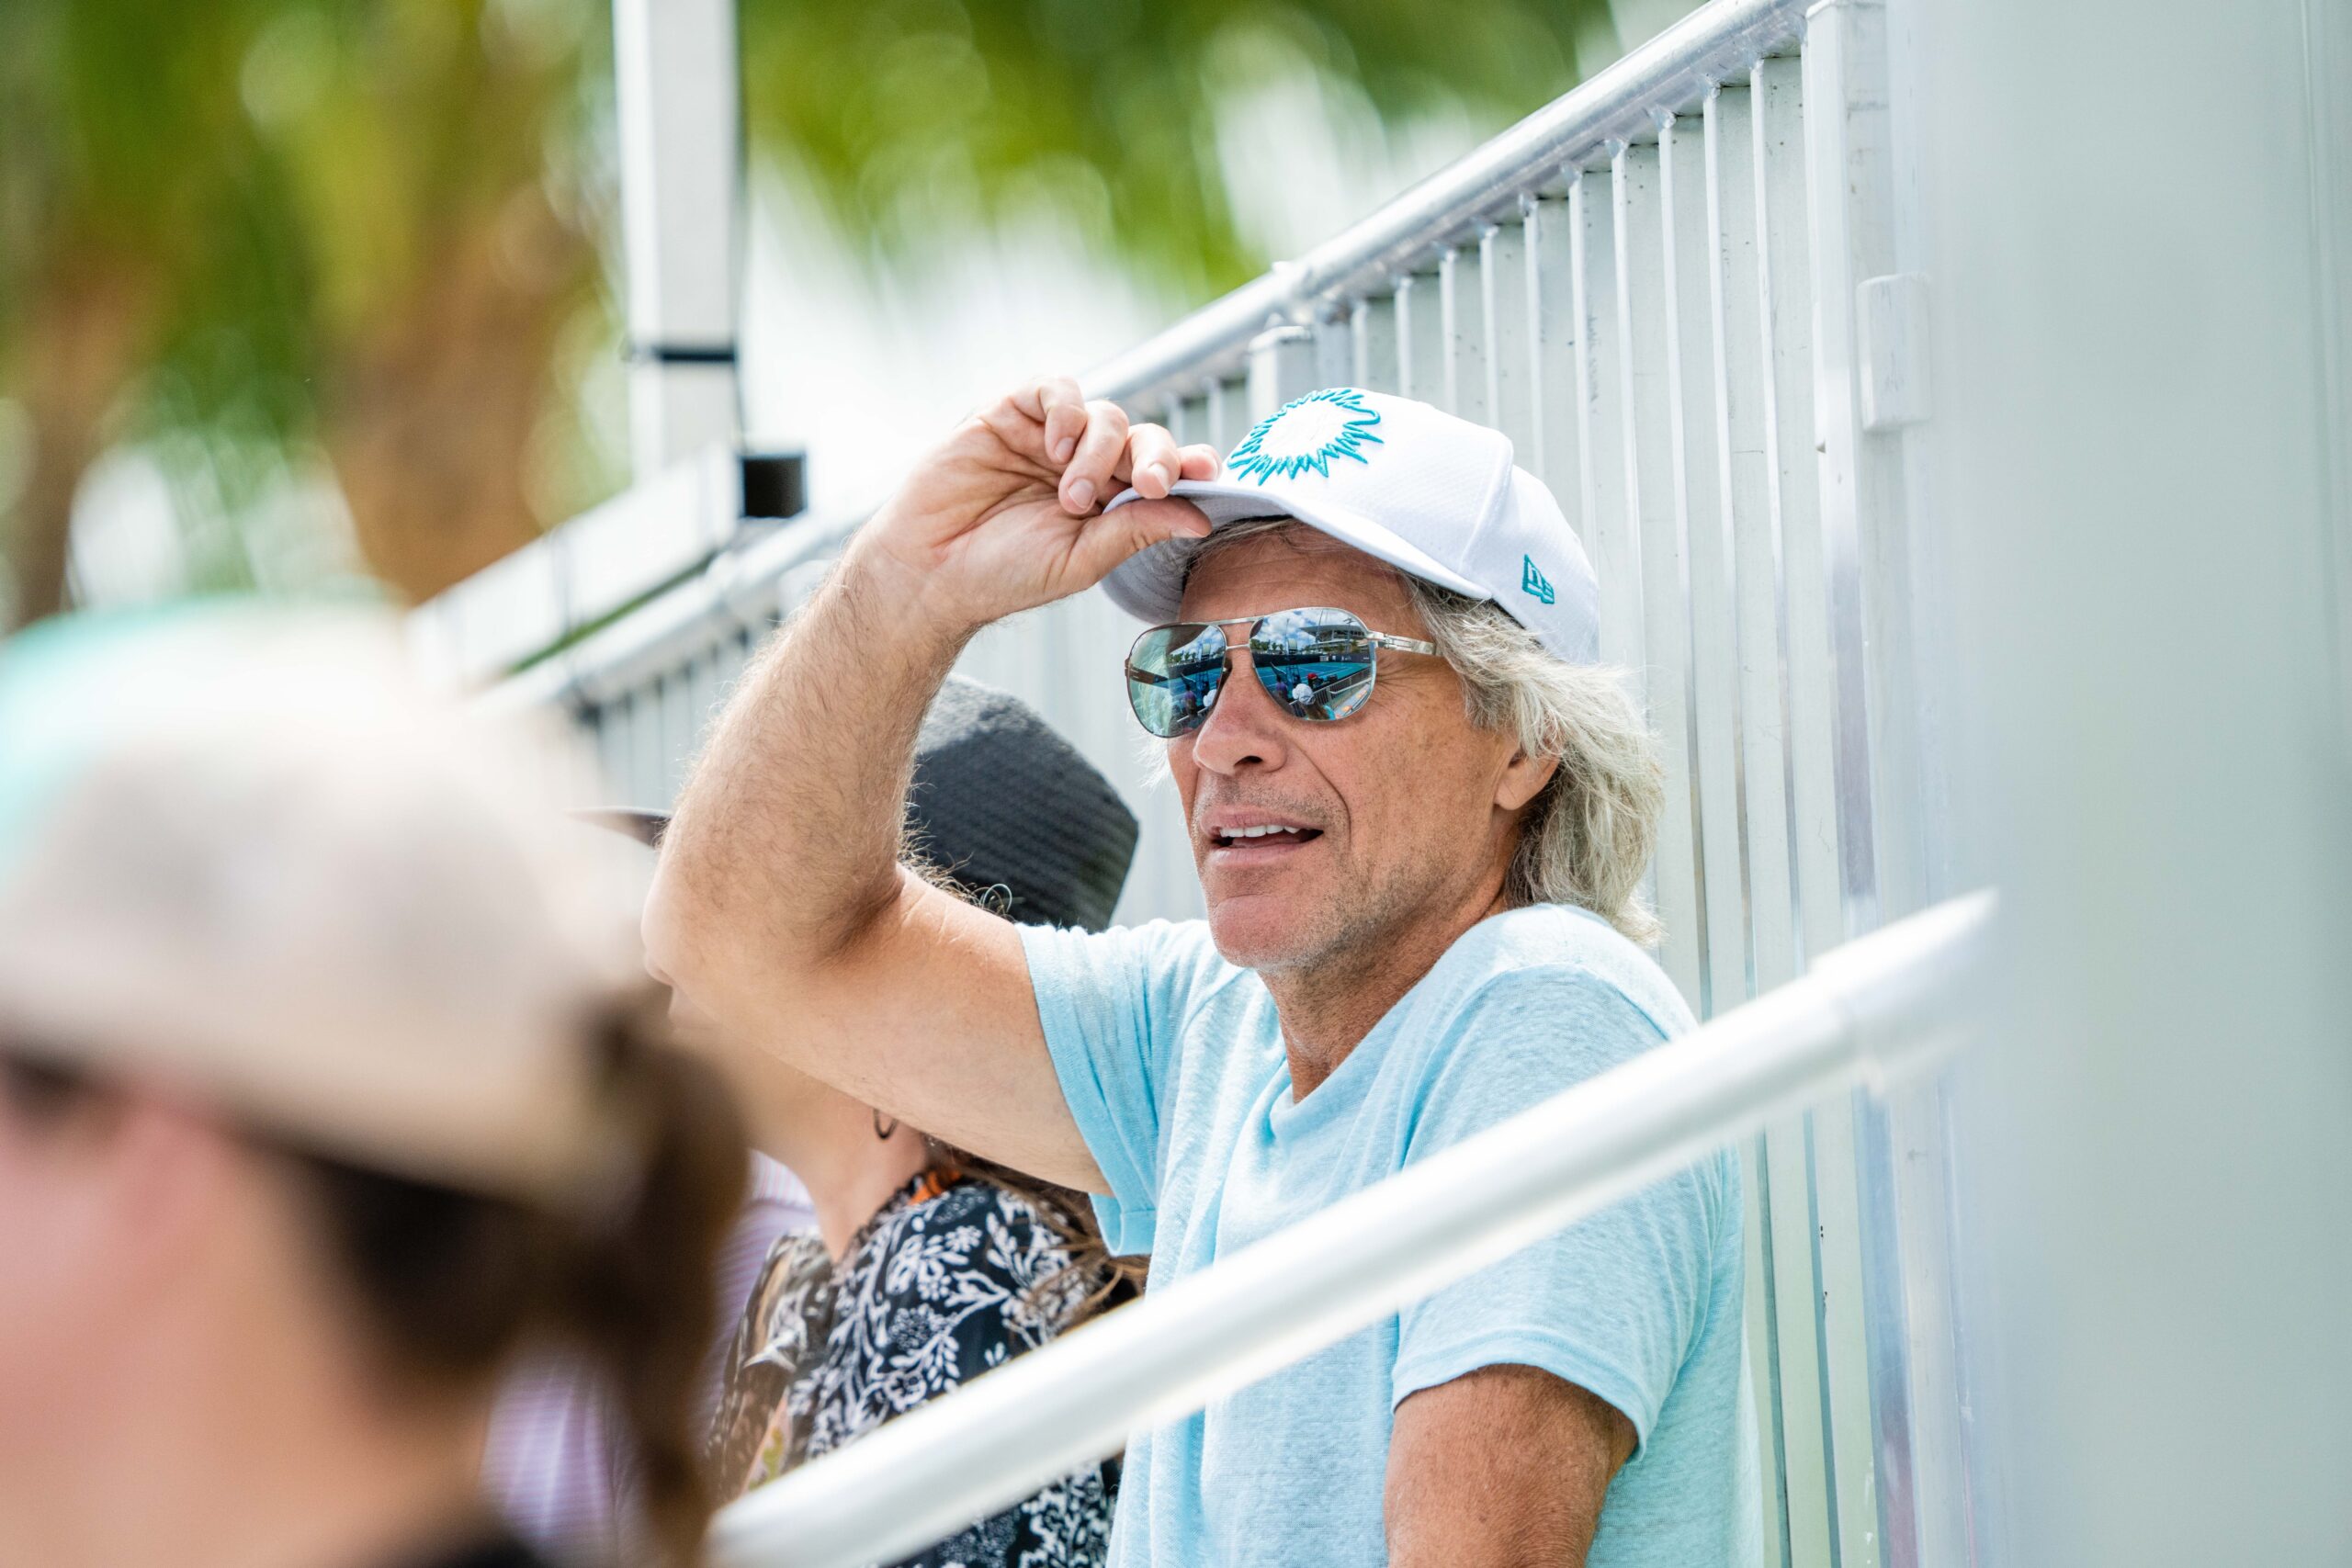 The legendary Jon Bon Jovi enjoying tennis at the 2023 Miami Open at Hard Rock Stadium in Miami Gardens, Florida.